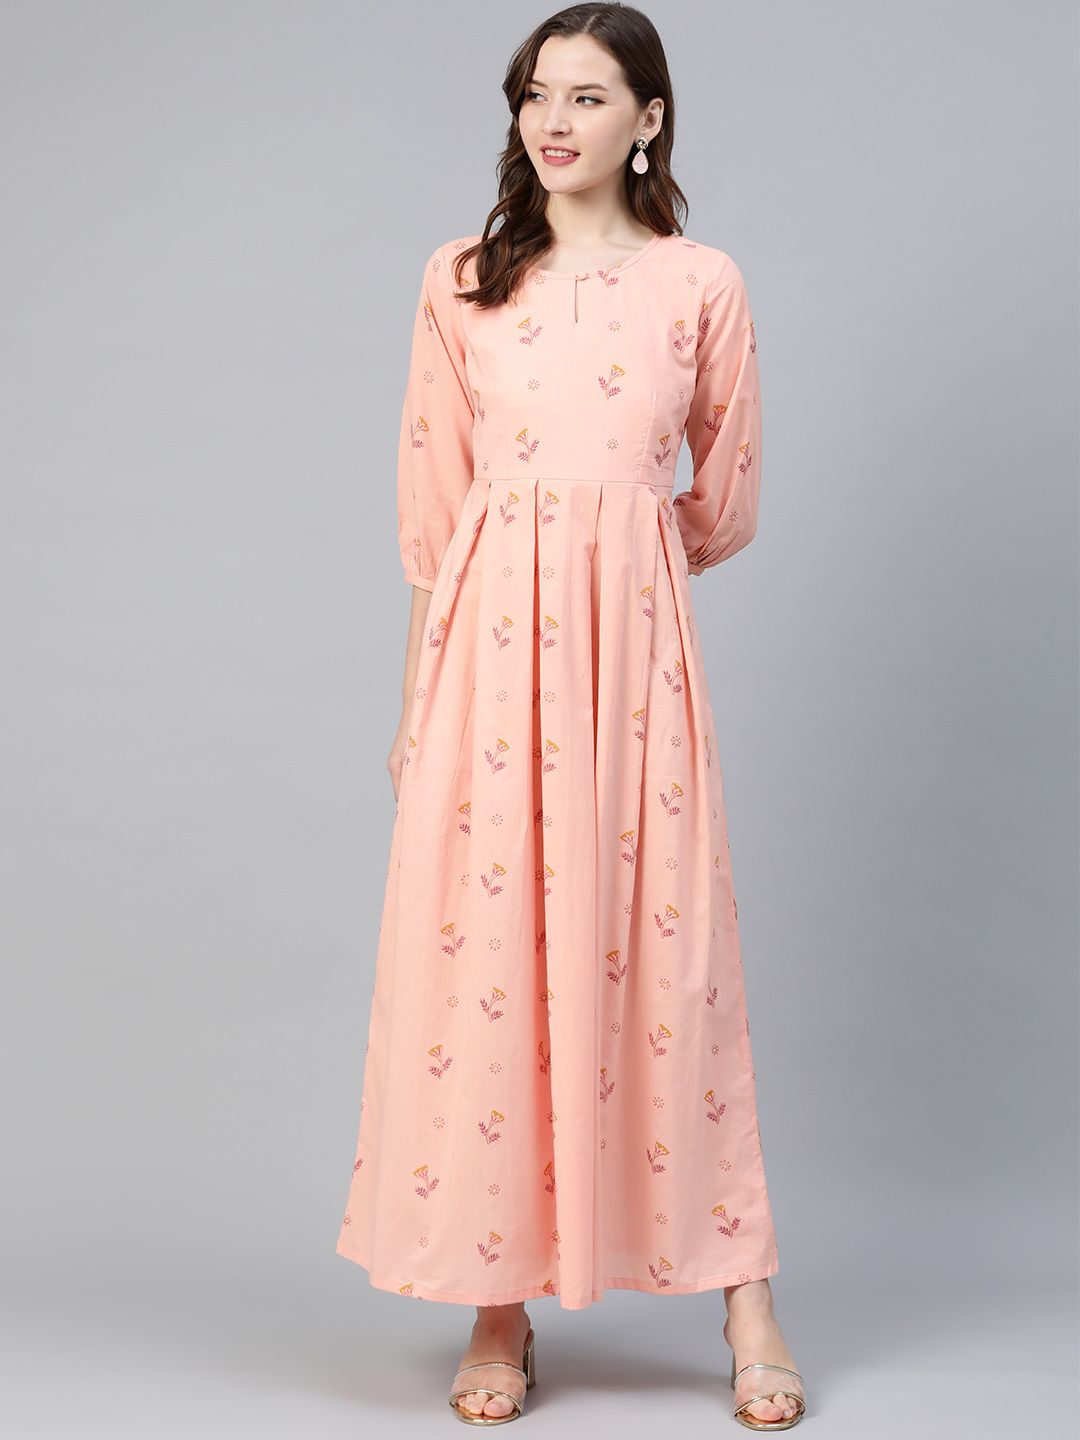 Idalia Women Peach-Coloured & Pink Printed Maxi Dress Price in India